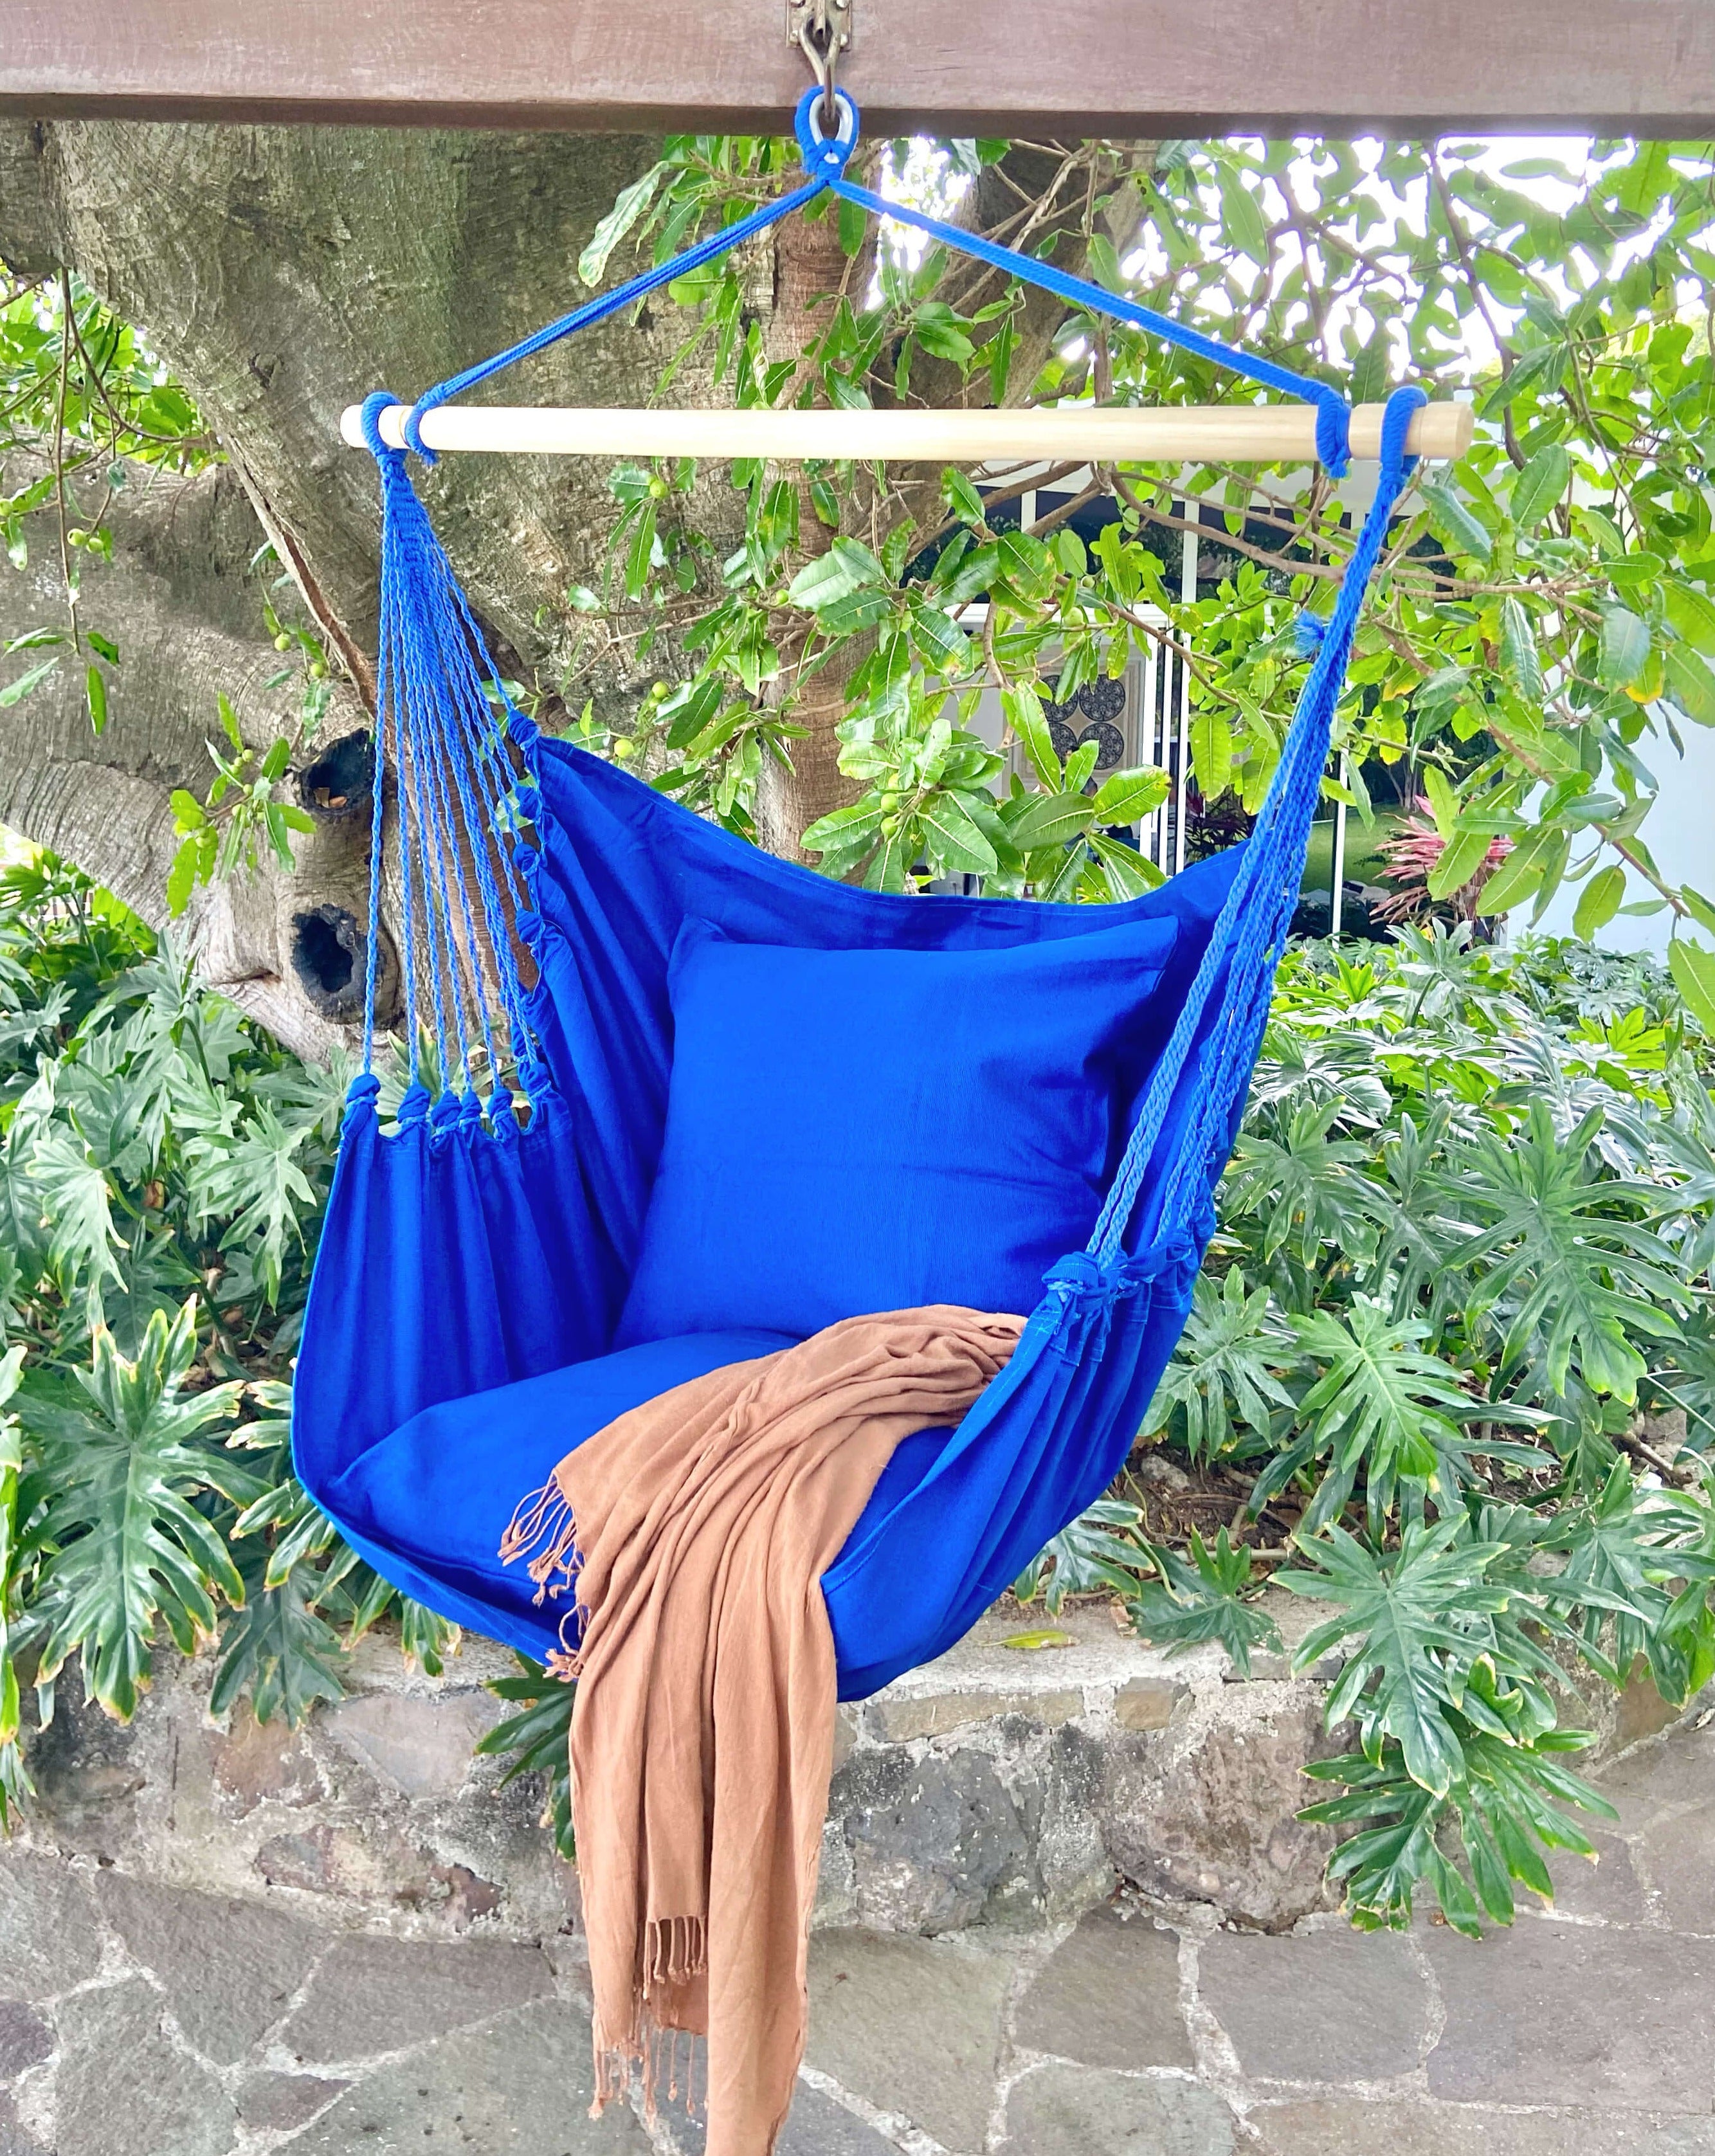 blue hanging chair hammock